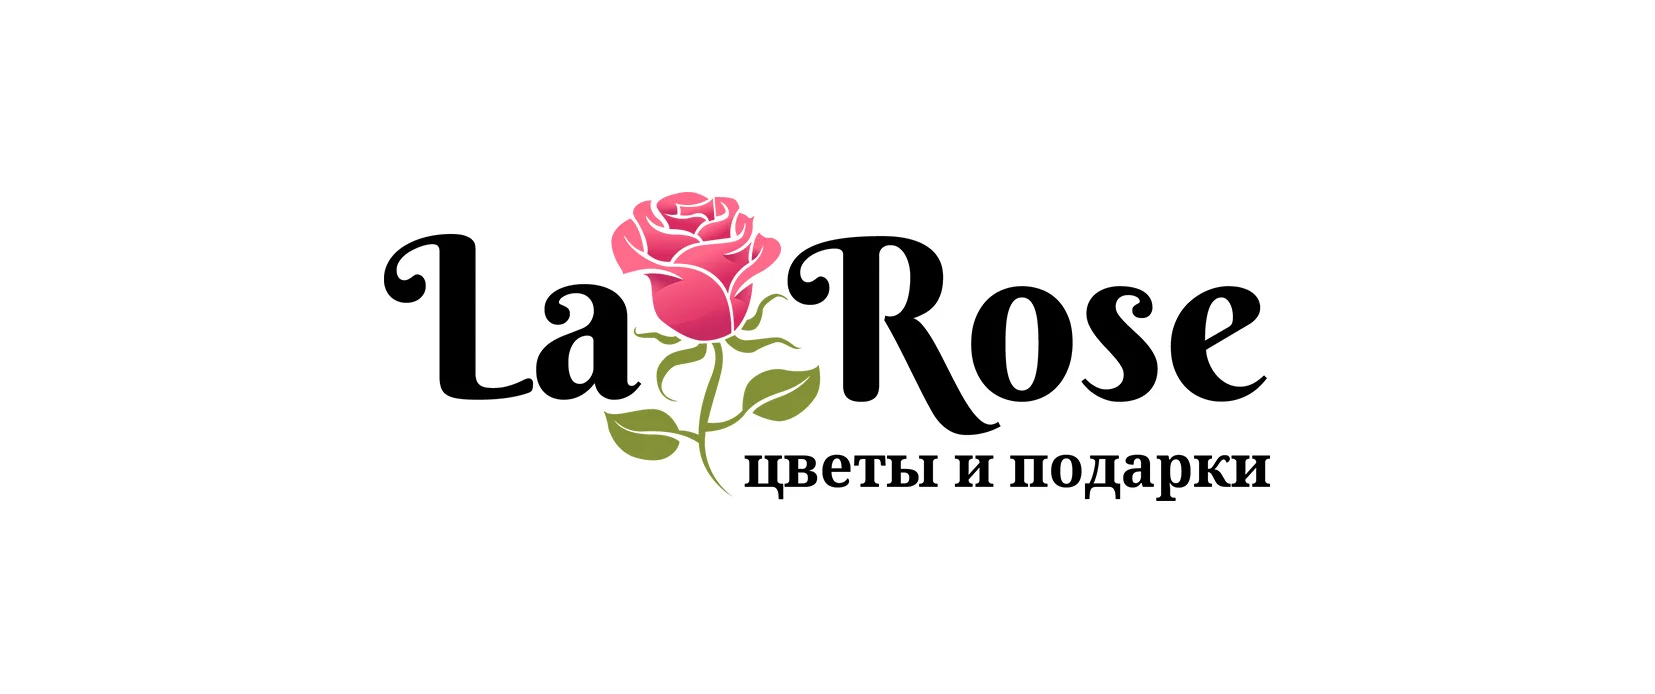 La Rose - цветы и подарки